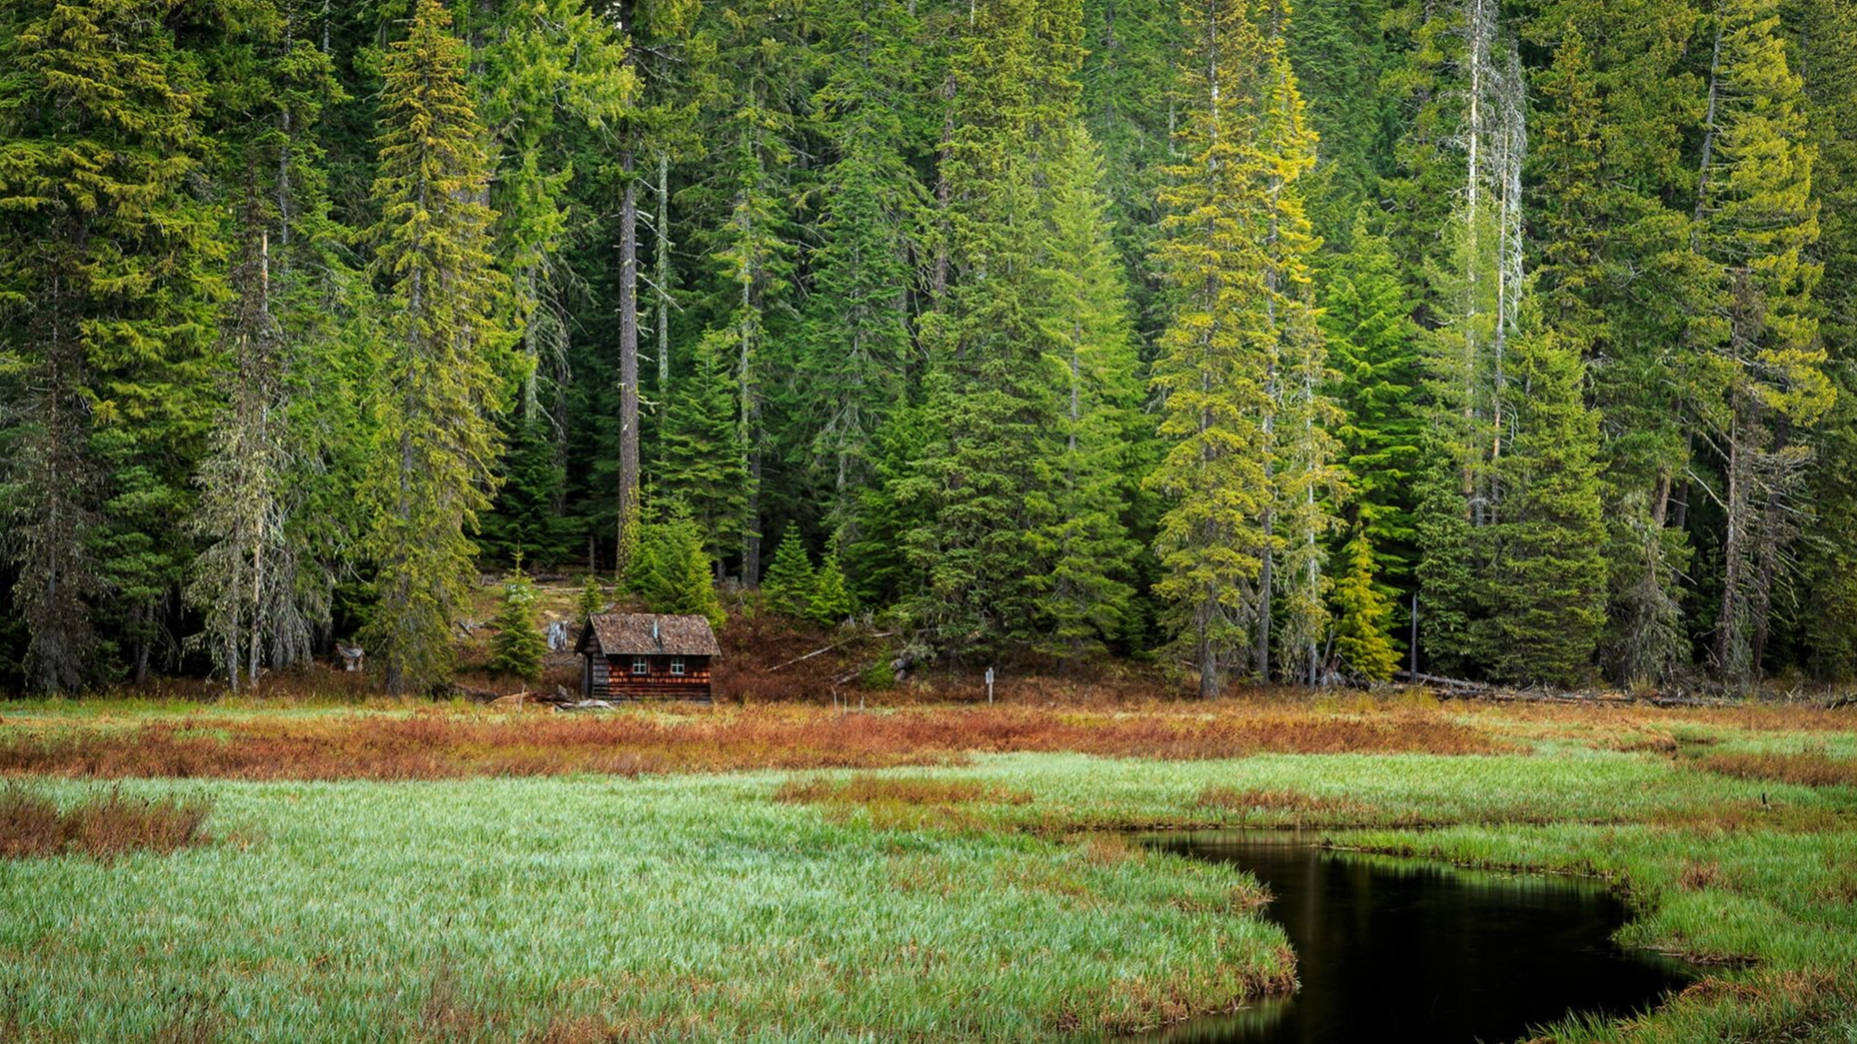 Breathtaking Landscape Of Oregon's Natural Beauty